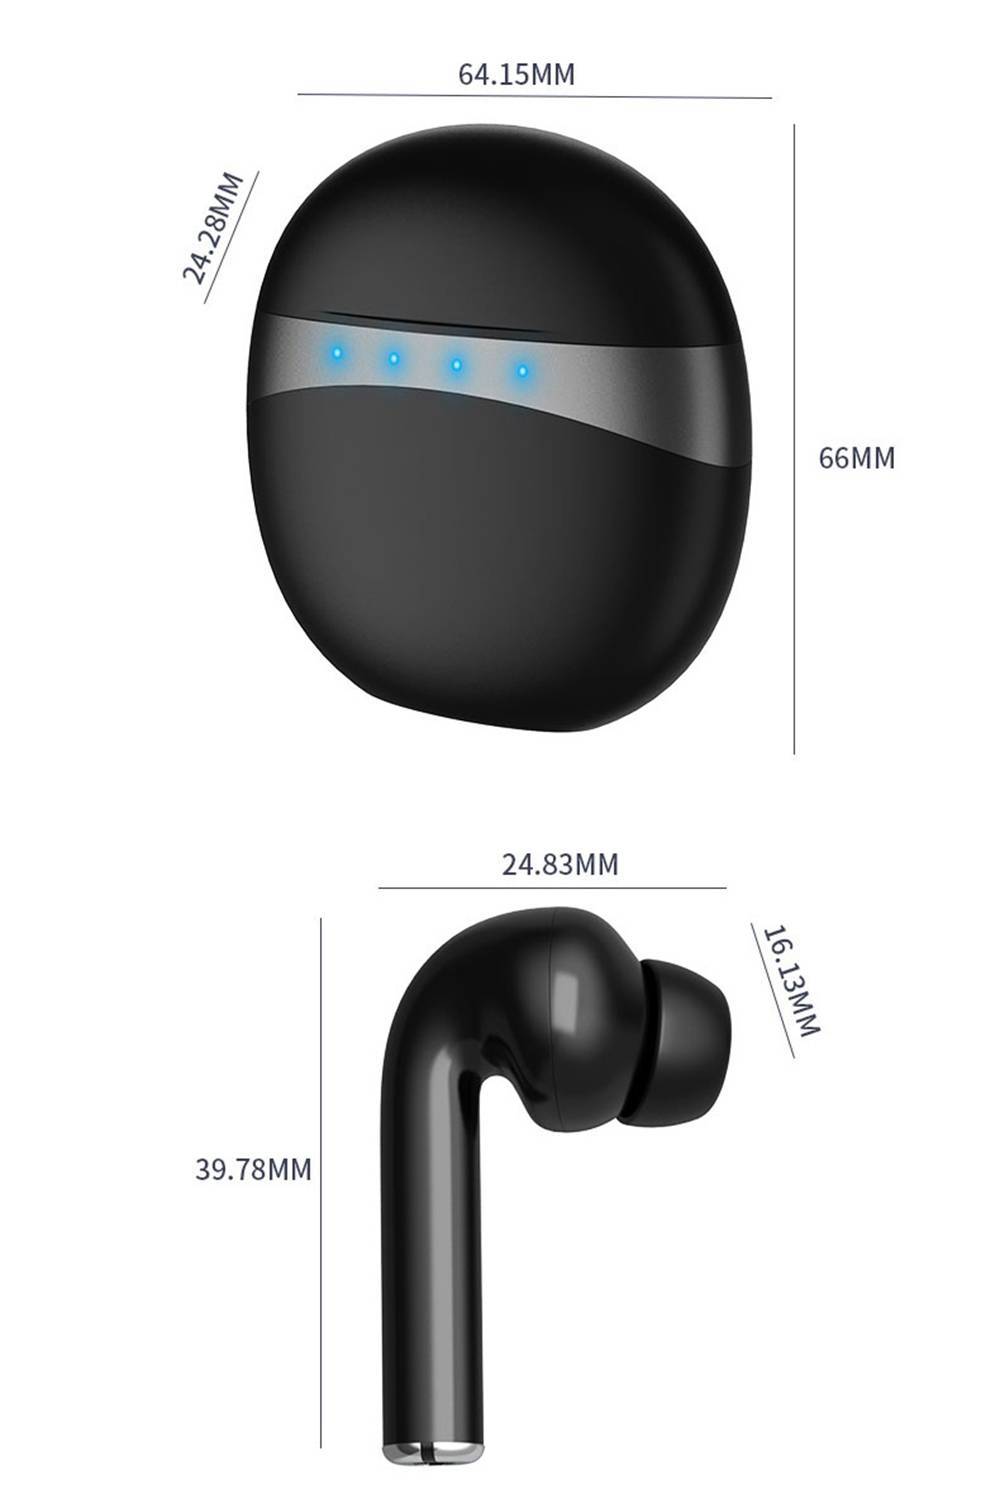 MKJ M19 Bluetooth 5.0 True Wireless Earphones Summon Siri Binaural Call 5 Hours Playtime - Black